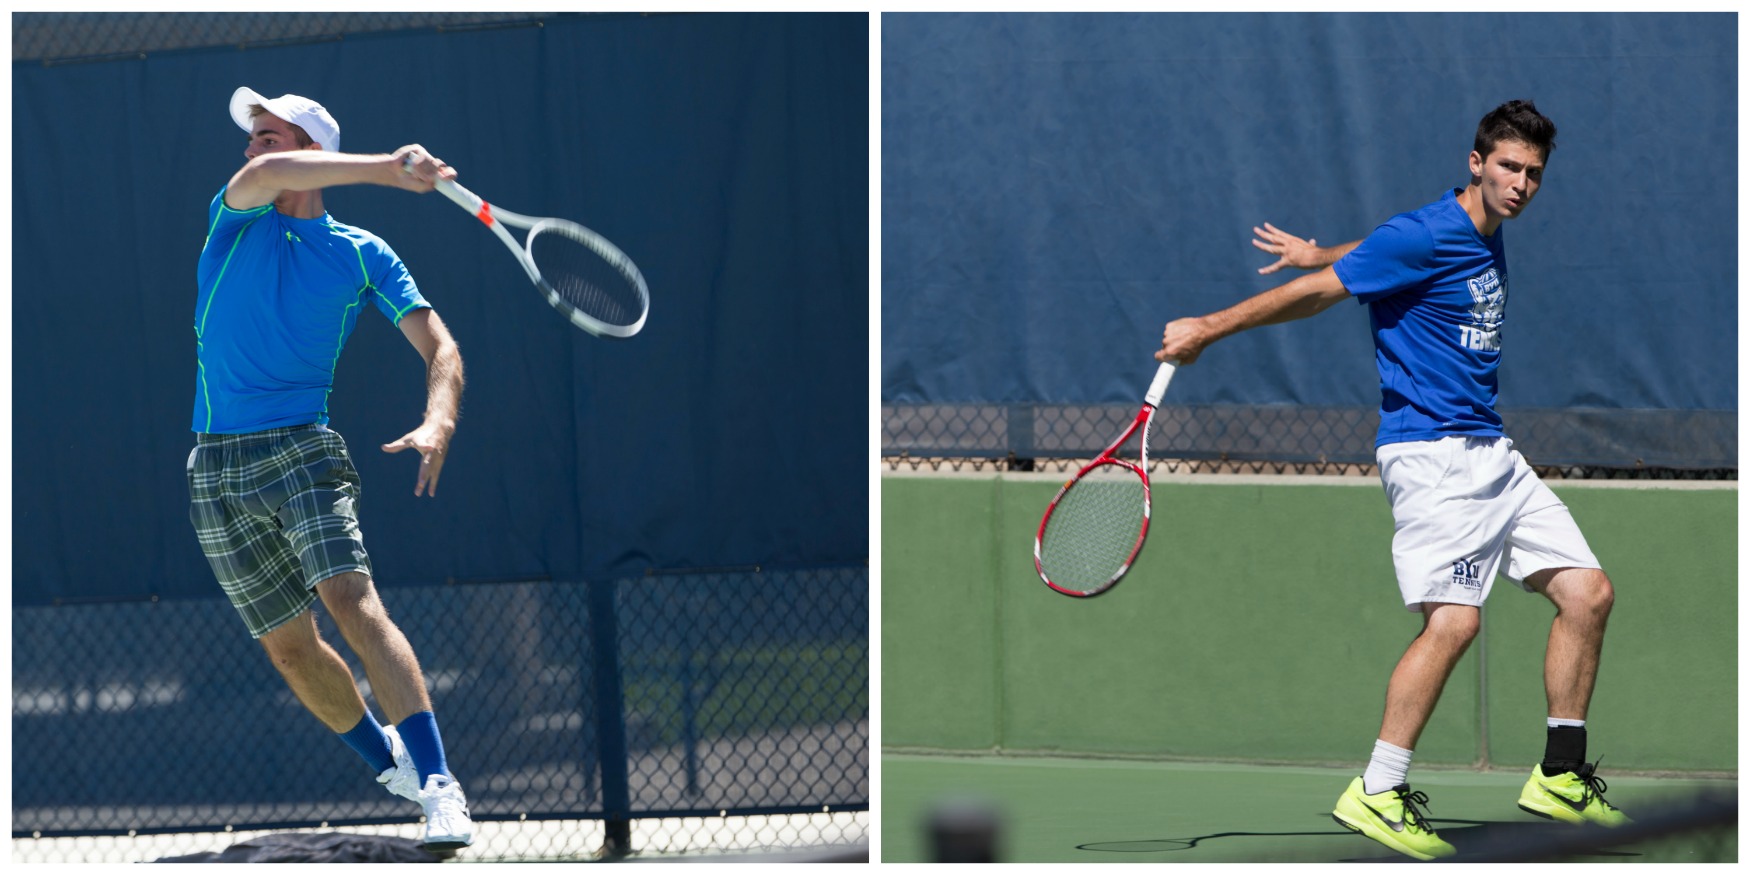 Sam Tullis (left) and Matt Pearce (right) competing in the Fall Tennis Classic. (Gian Luca Cuestas)